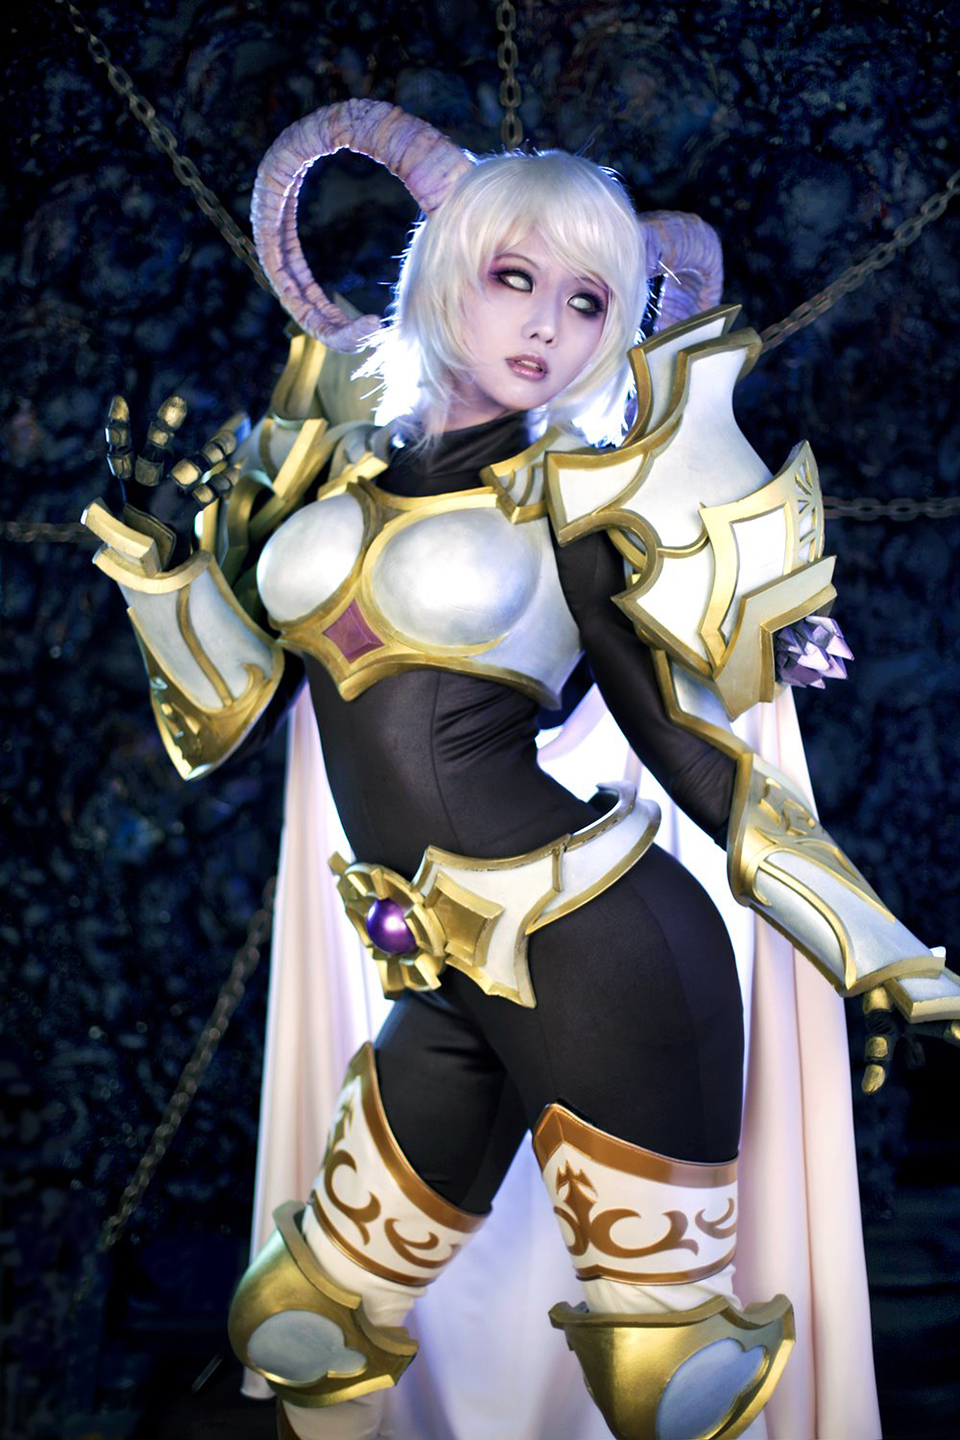 Tasha quyến rũ với cosplay Yrel trong World of Warcraft